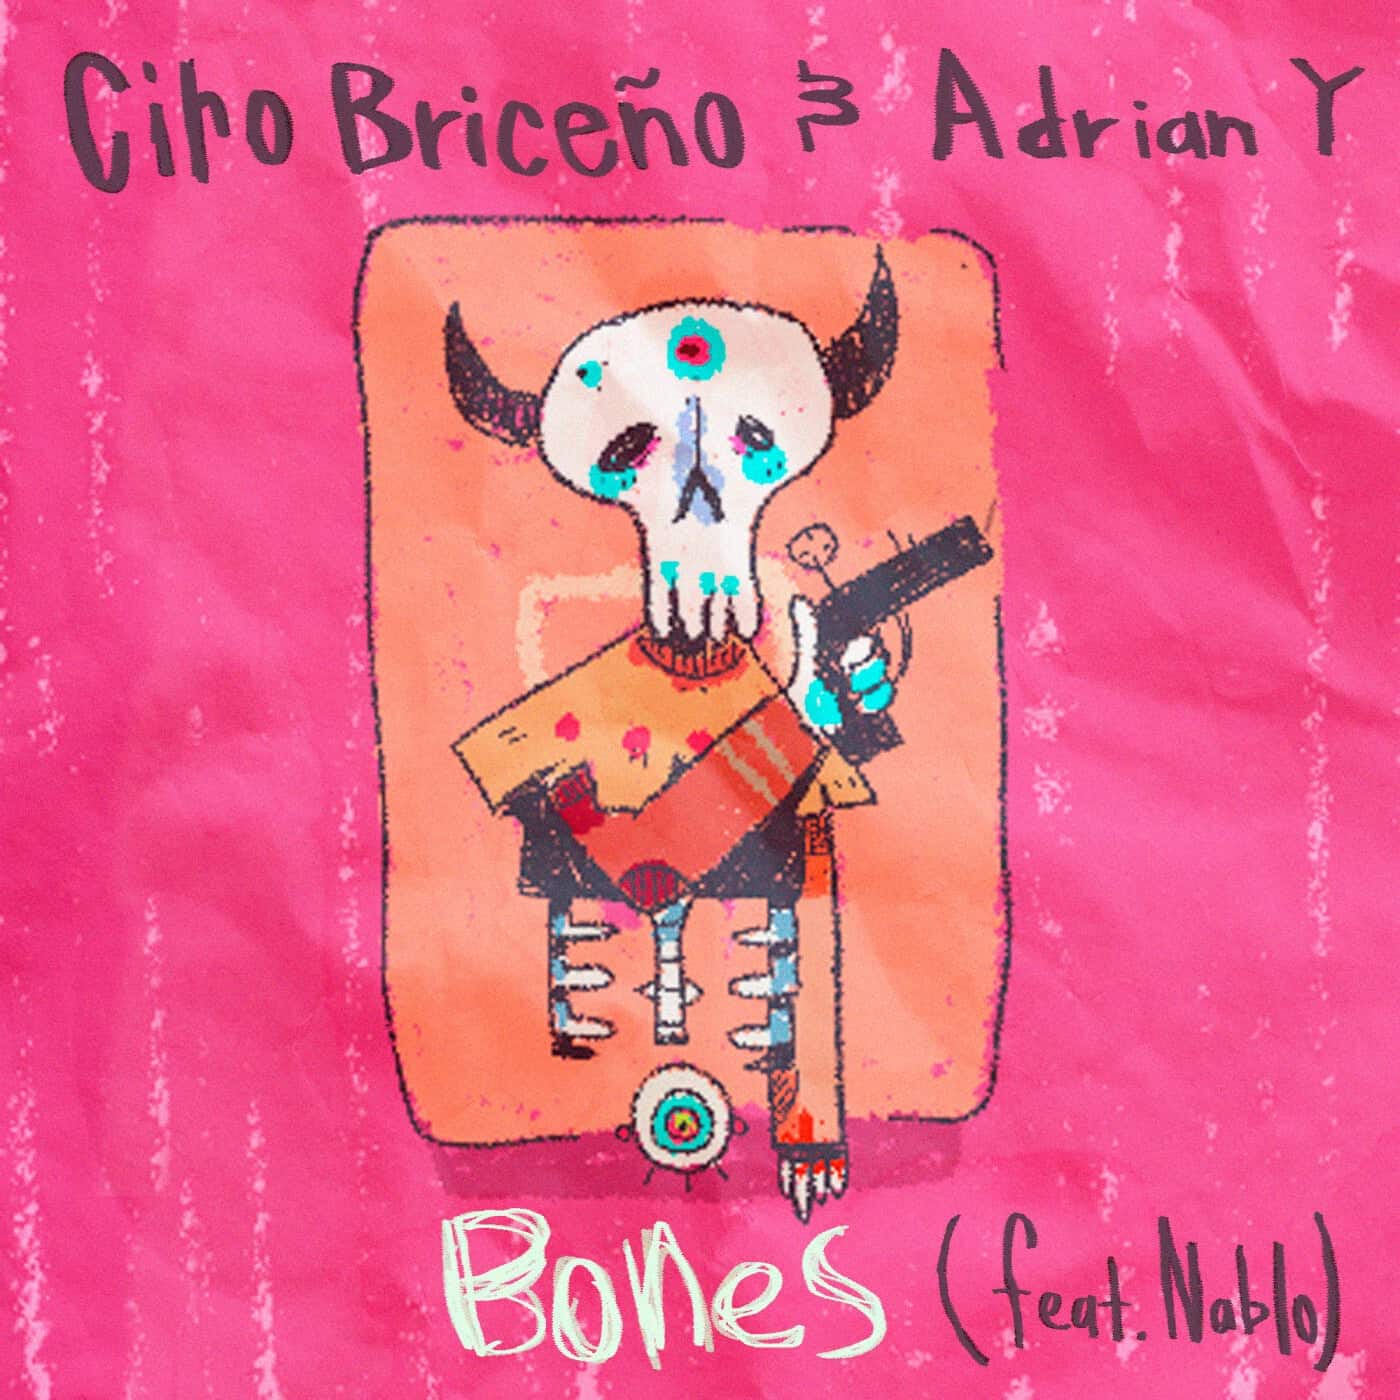 Download Ciro Briceno, Adrian Y - Bones (feat. Nablo) on Electrobuzz